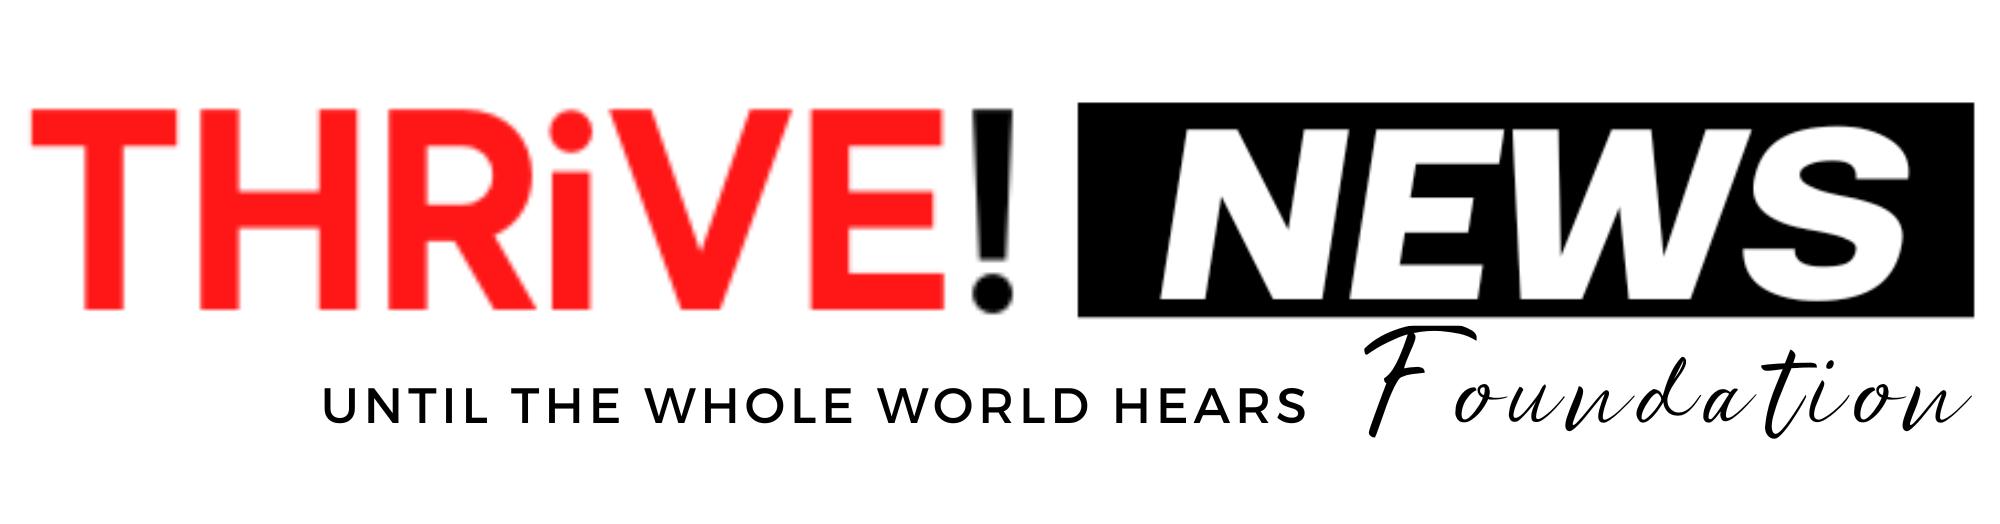 thrive-news-logo